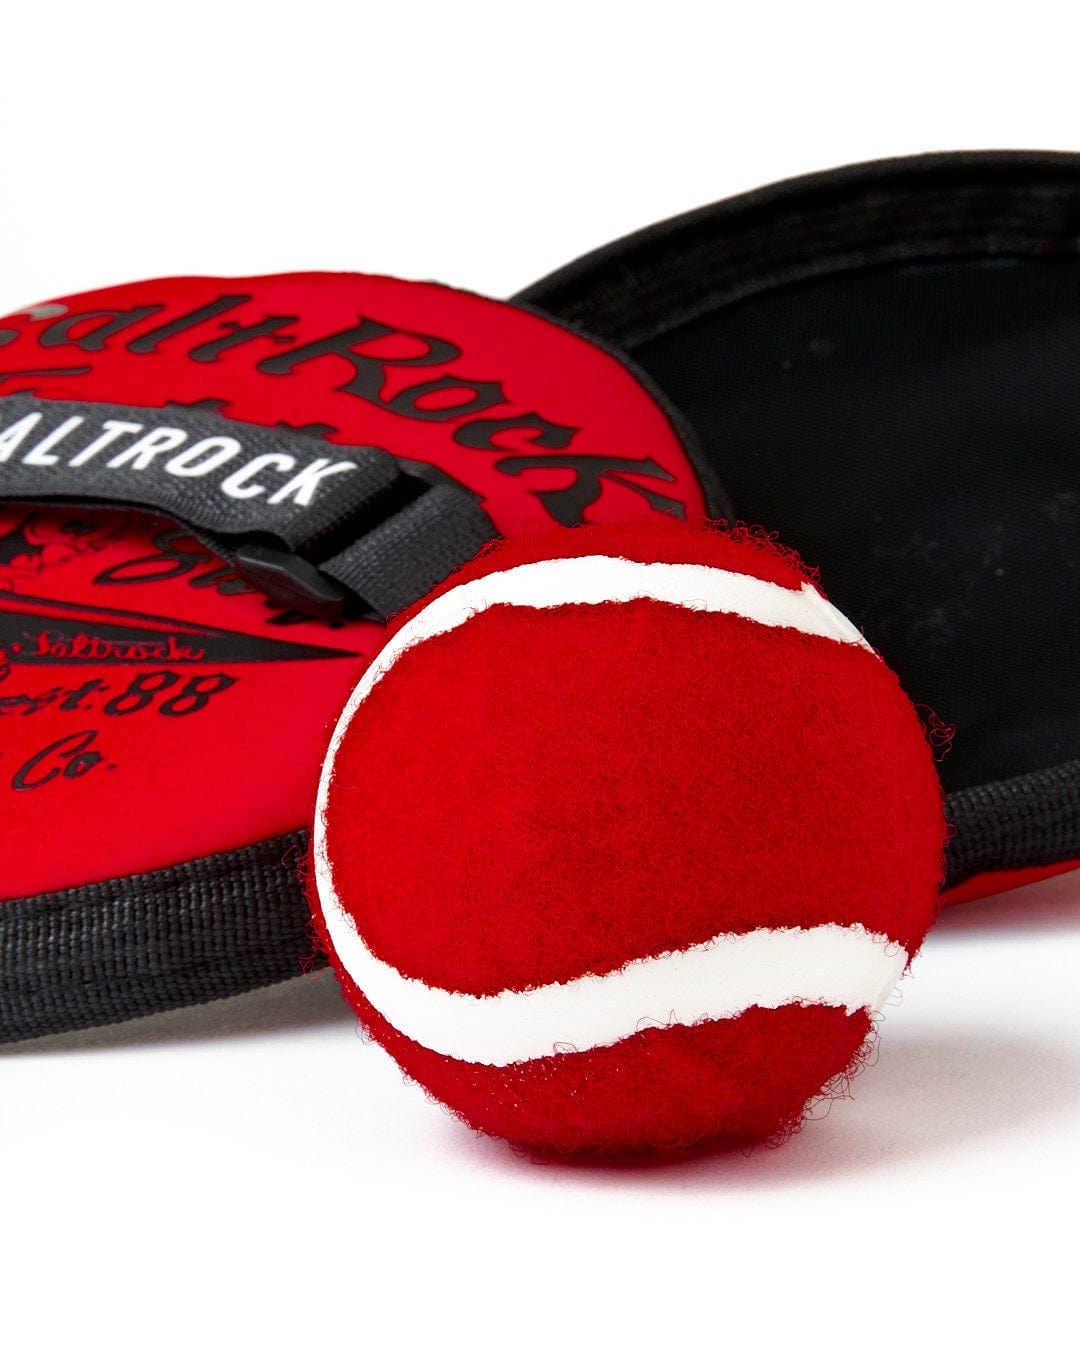 A Jonty - Catch Ball Set - Red and a black bag featuring Saltrock branding. Great for beach games like Catch Ball Set.